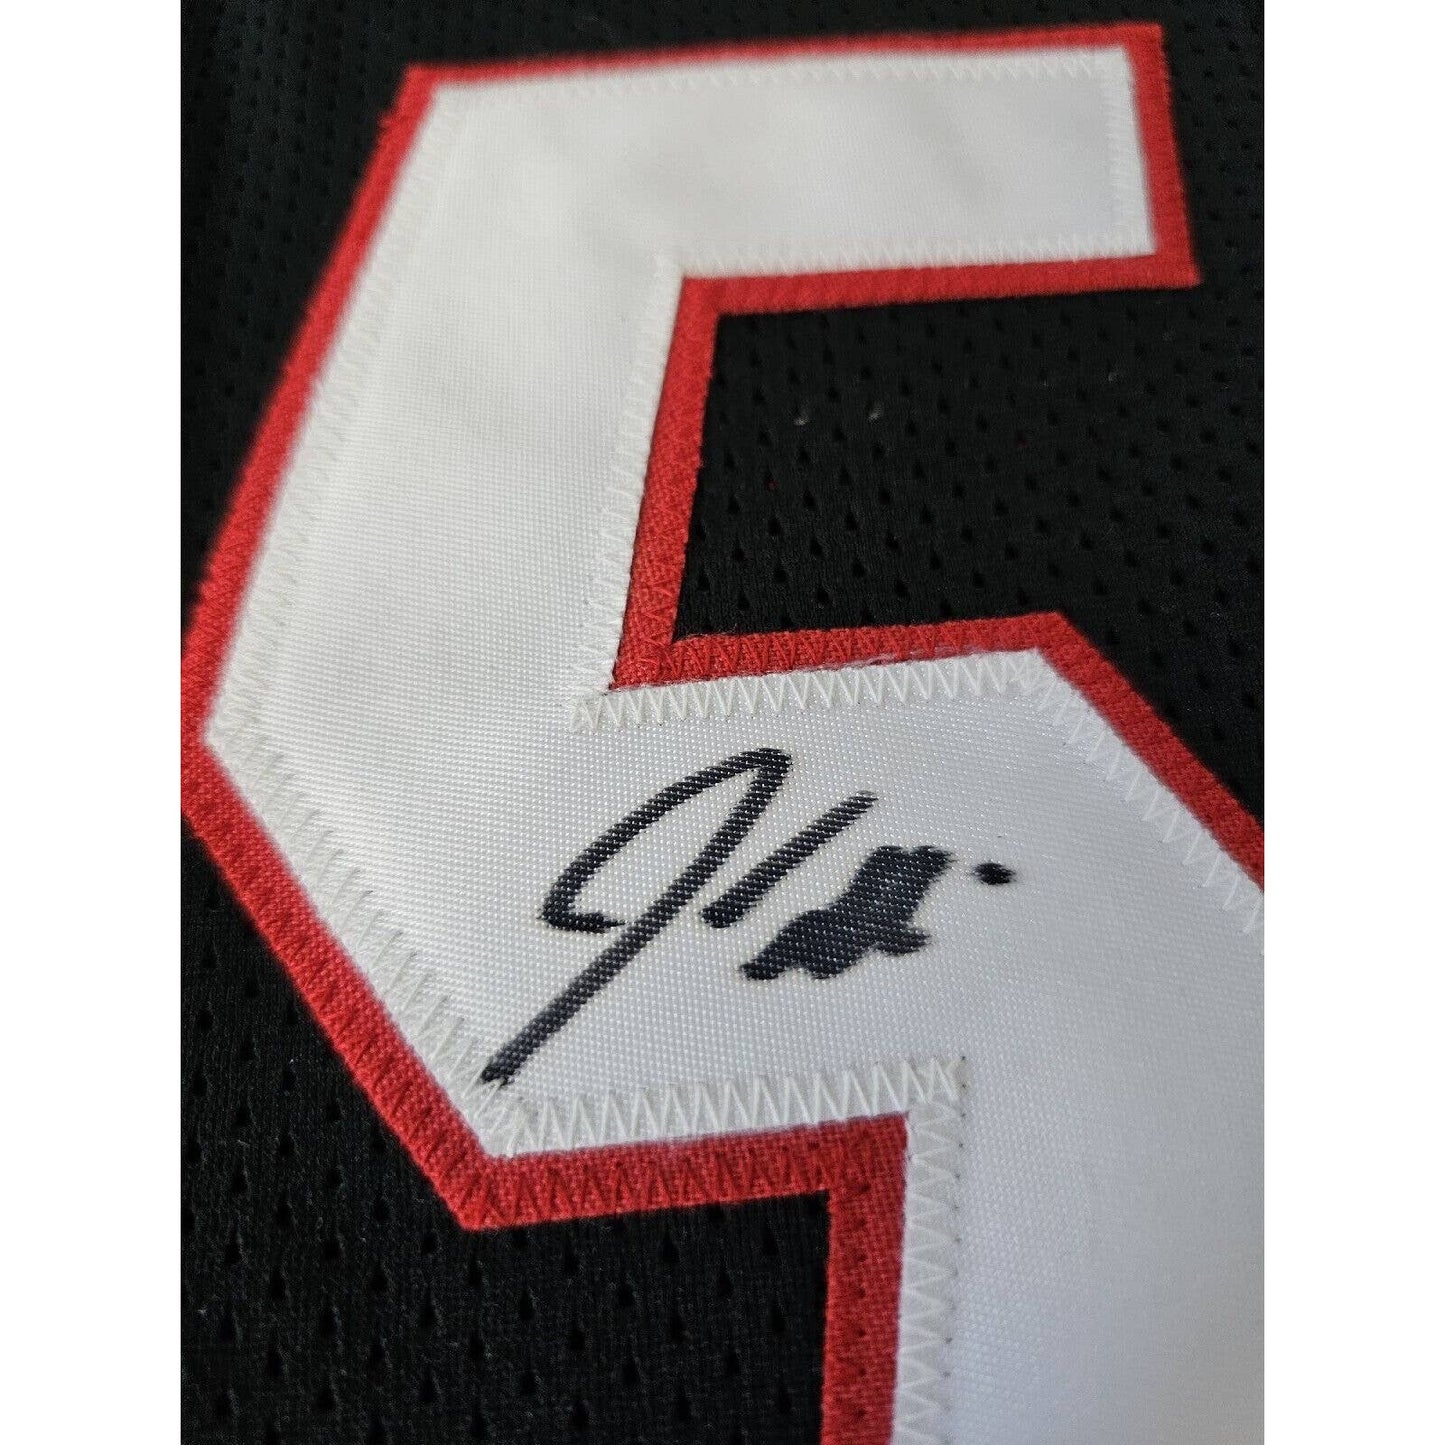 Jason Williams Autographed/Signed Jersey PSA/DNA COA Miami Heat Legend